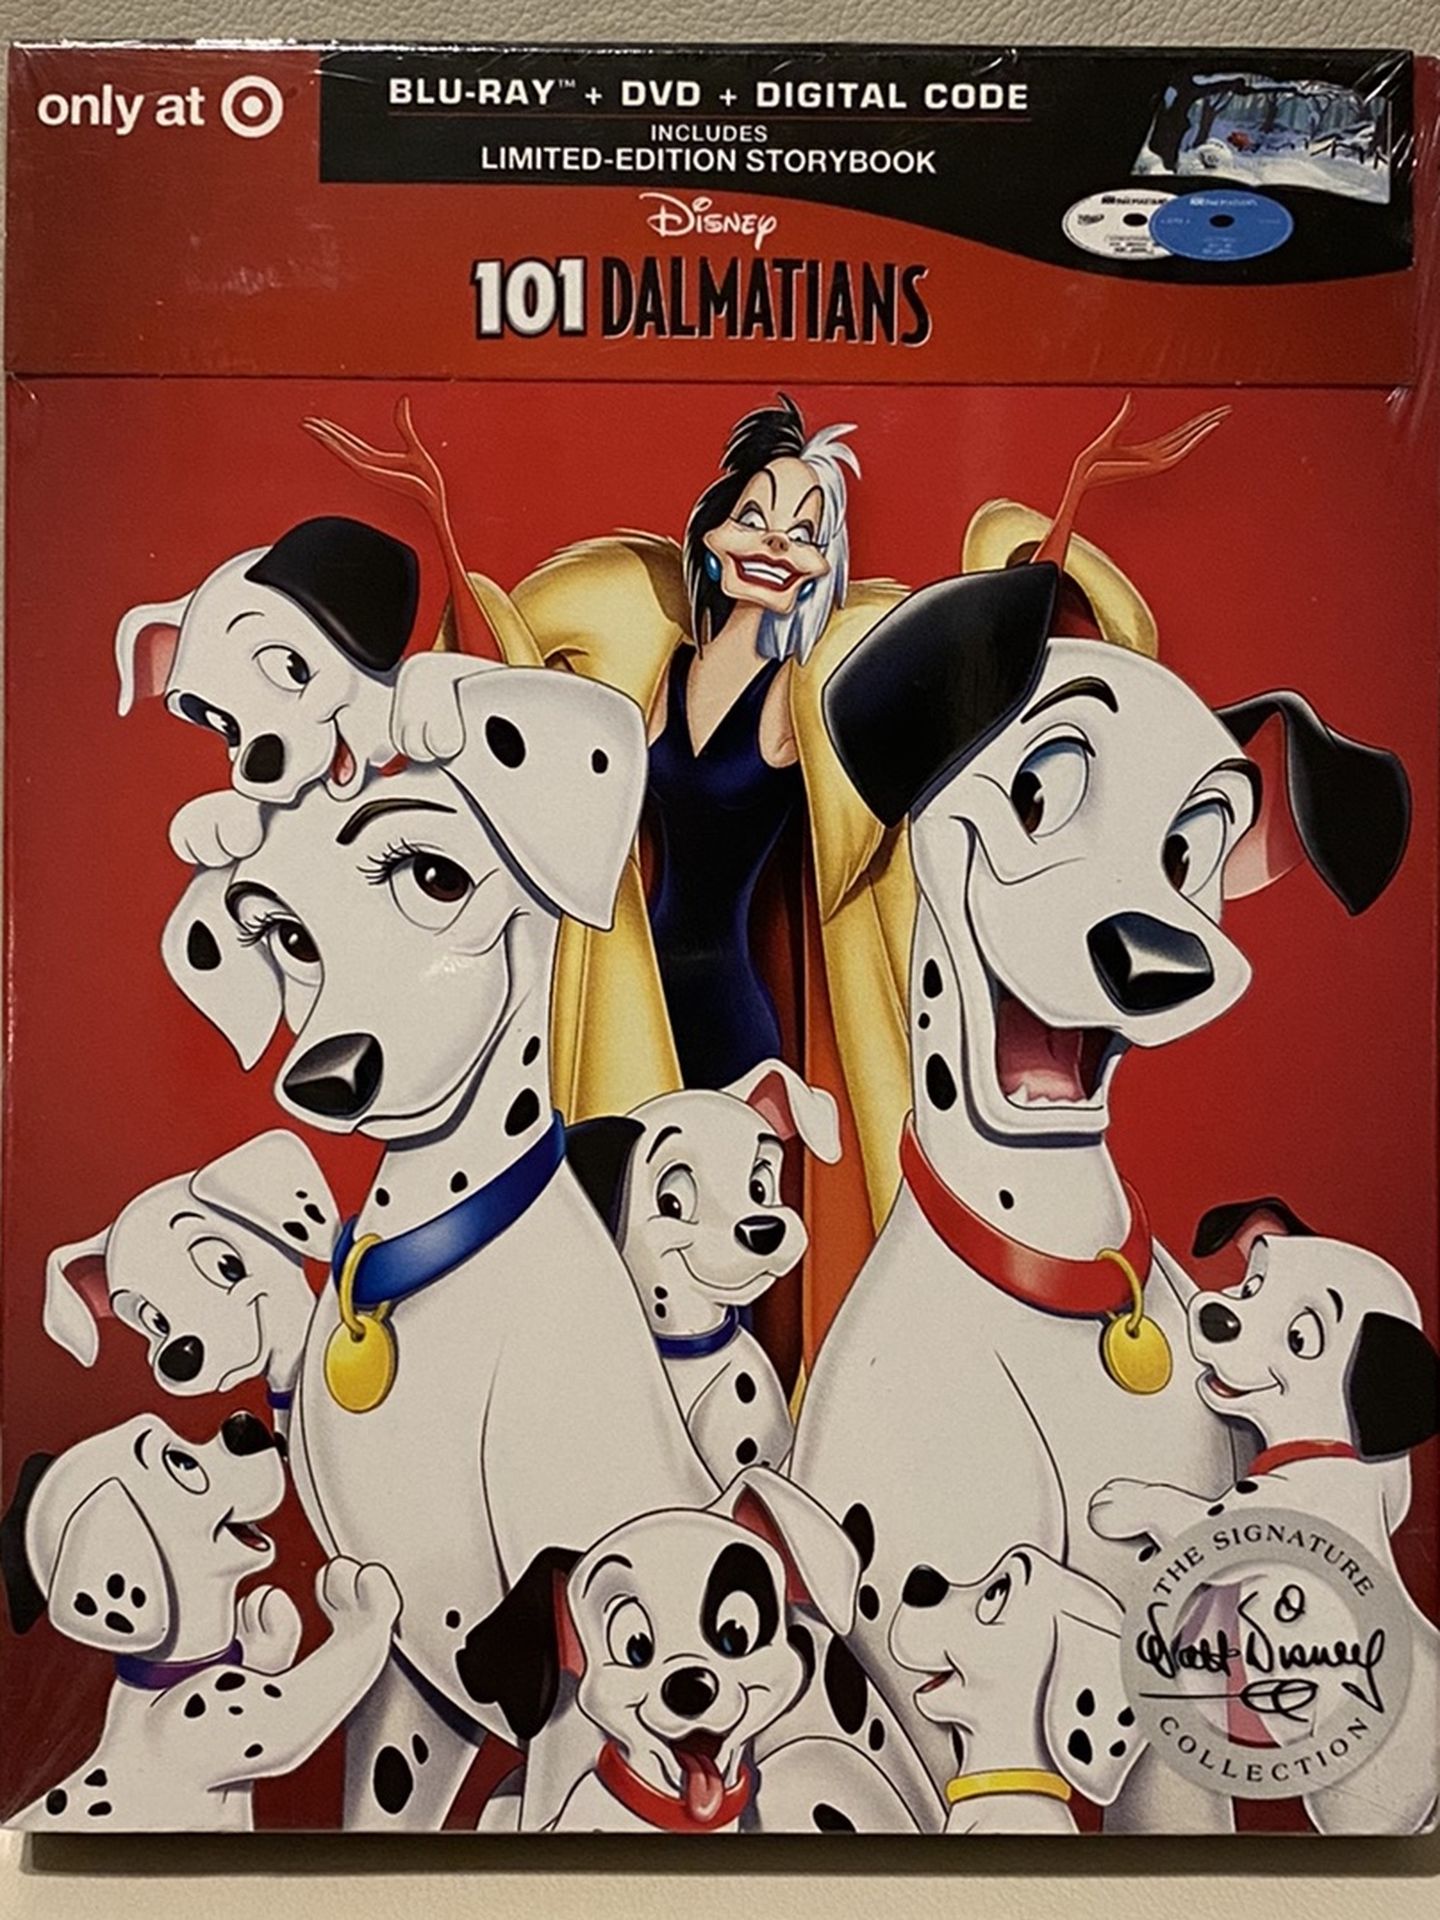 *New* Disney’s 101 Dalmatians BluRay + DVD + Digital Code